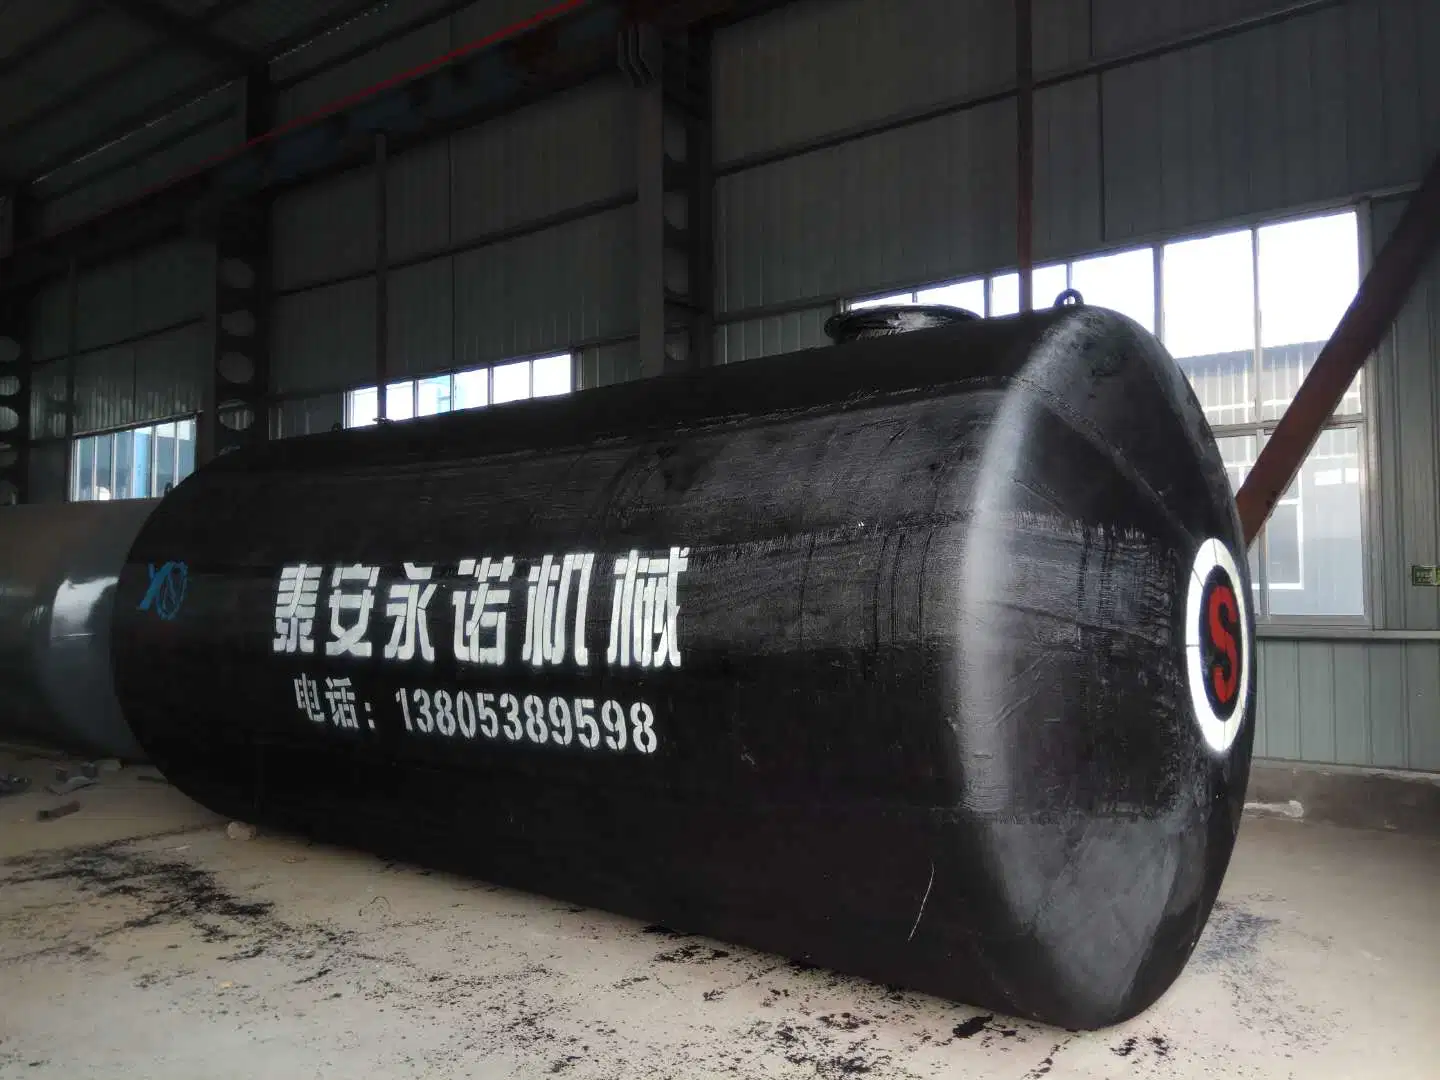 Vertical Stainless Steel Water Food Milk Oil Liquid Storage Tank Underground Tanks Container for Sale